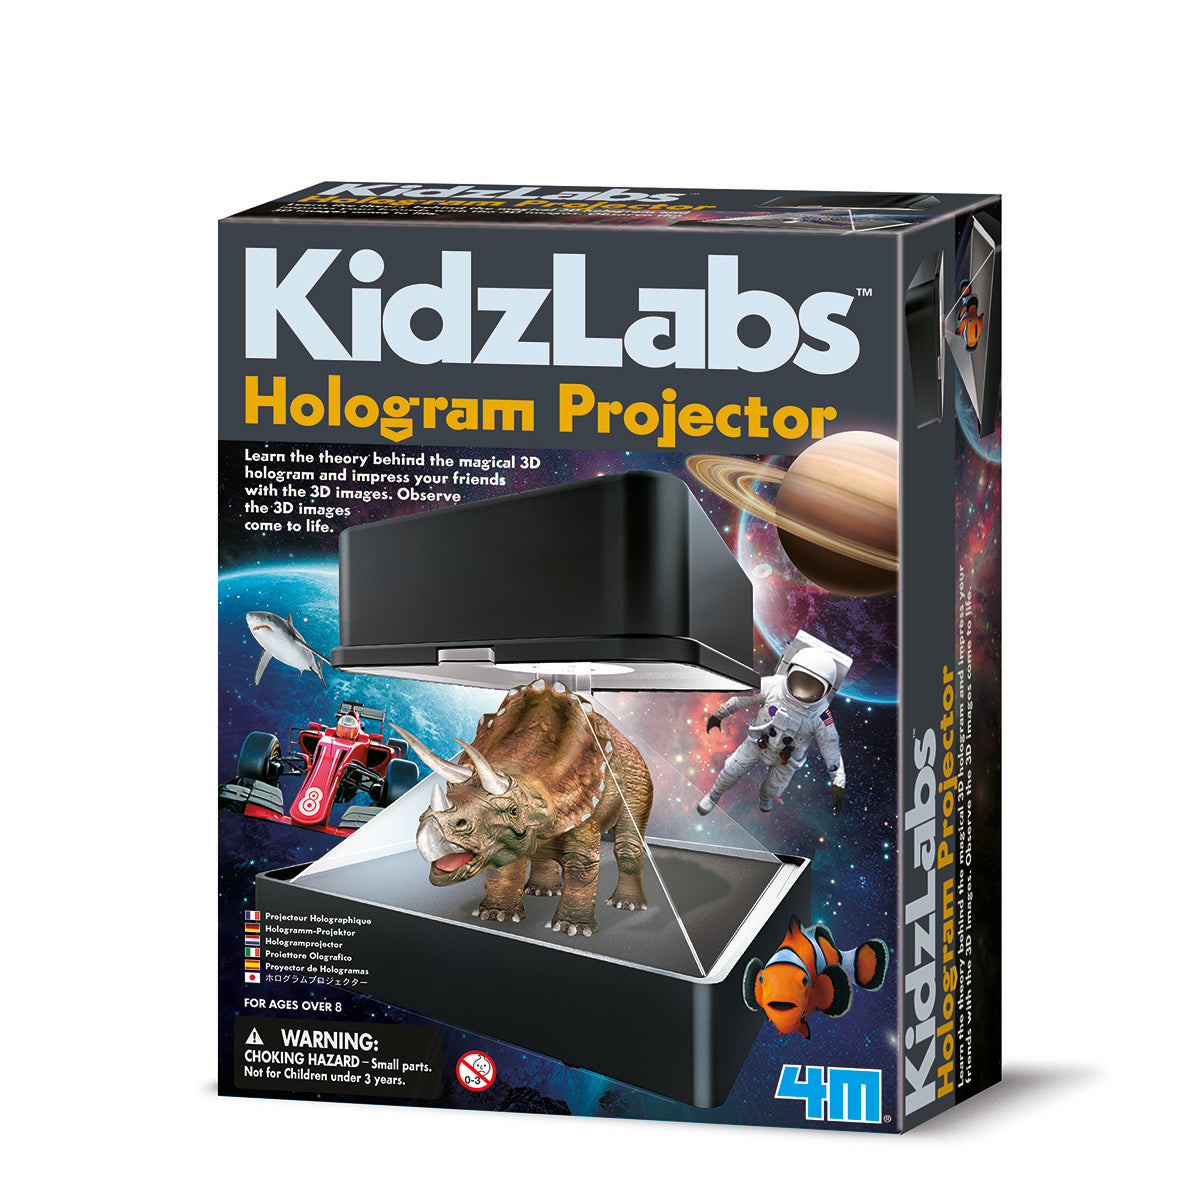 Kids Labs Hologram Projector